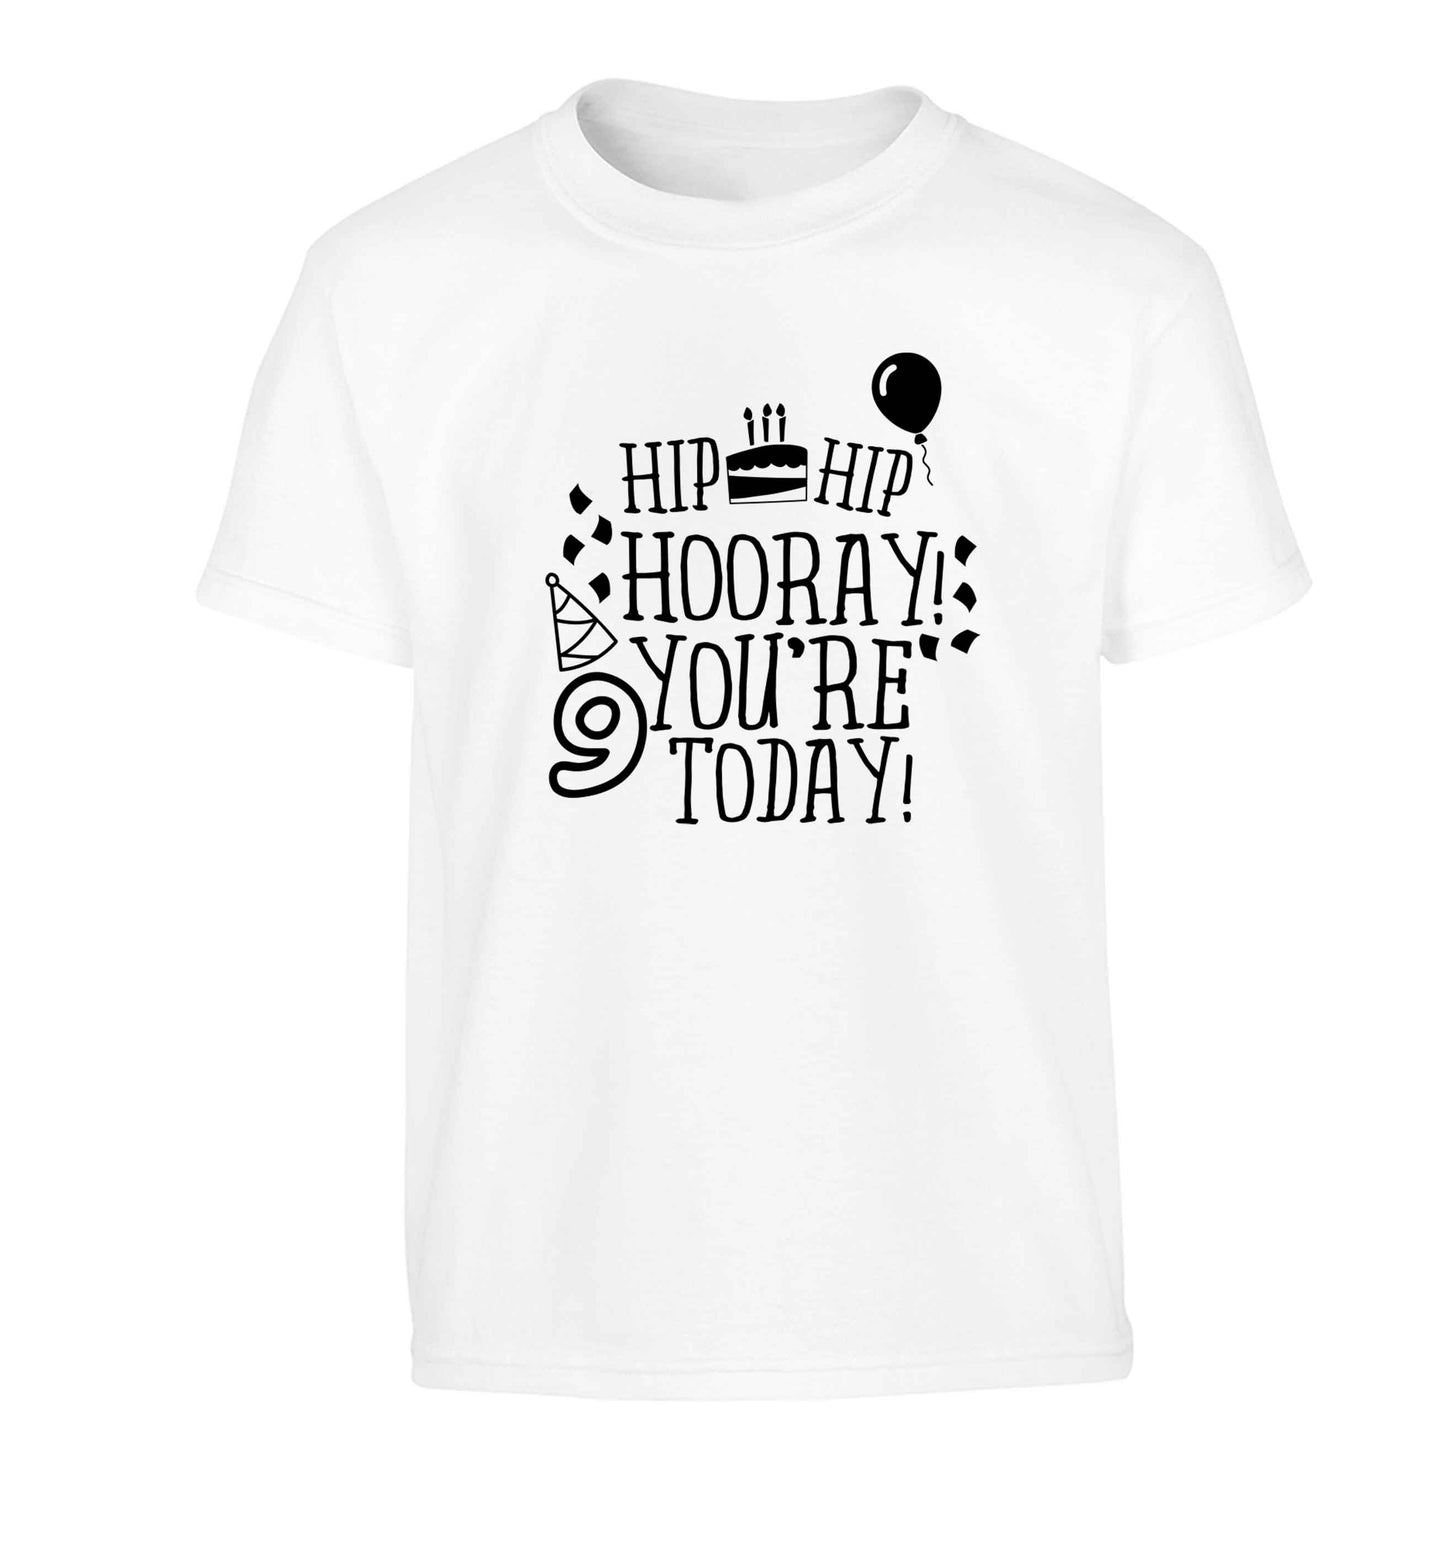 Hip hip hooray you're 9 today! Children's white Tshirt 12-13 Years